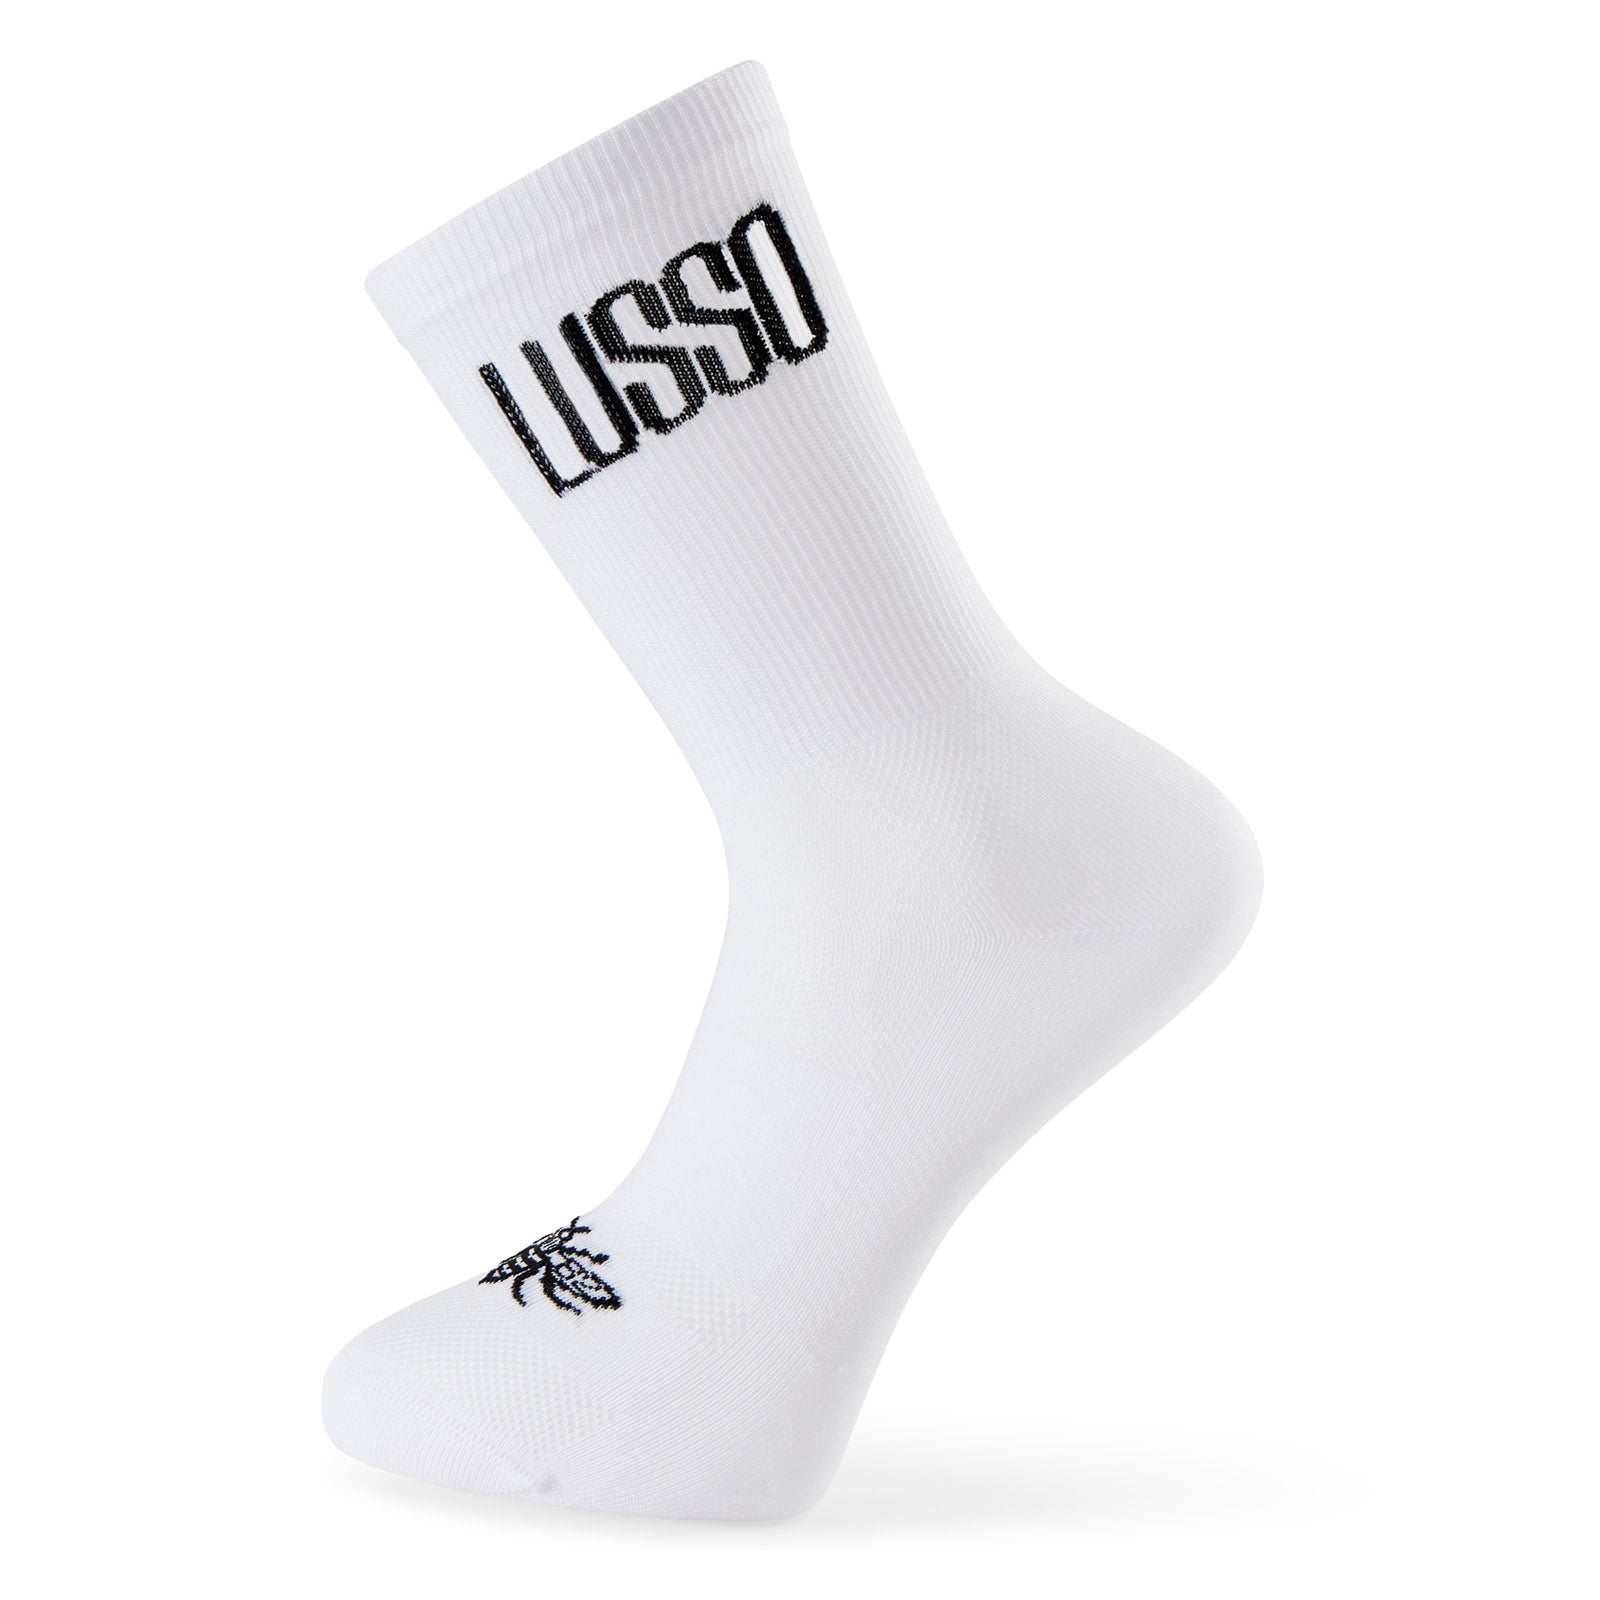 Paragon Summer Socks - Lusso Cycle Wear